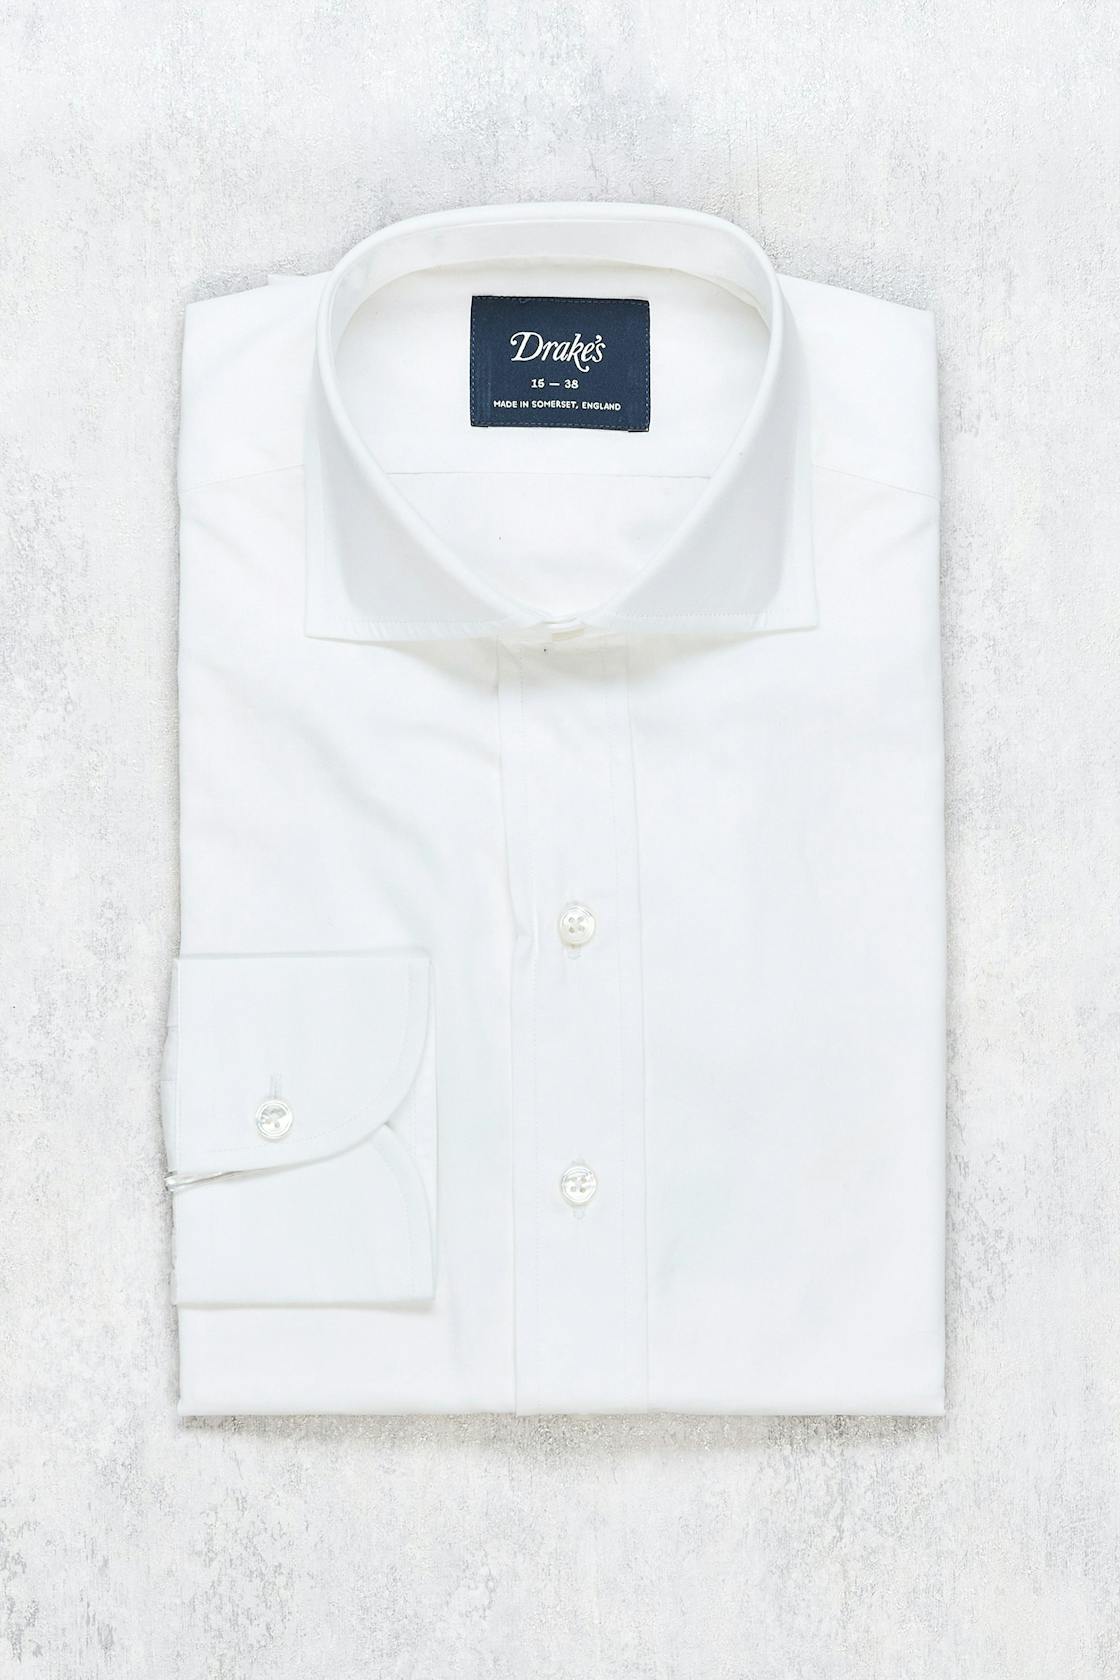 Drake's White Cotton Spread Collar Shirt